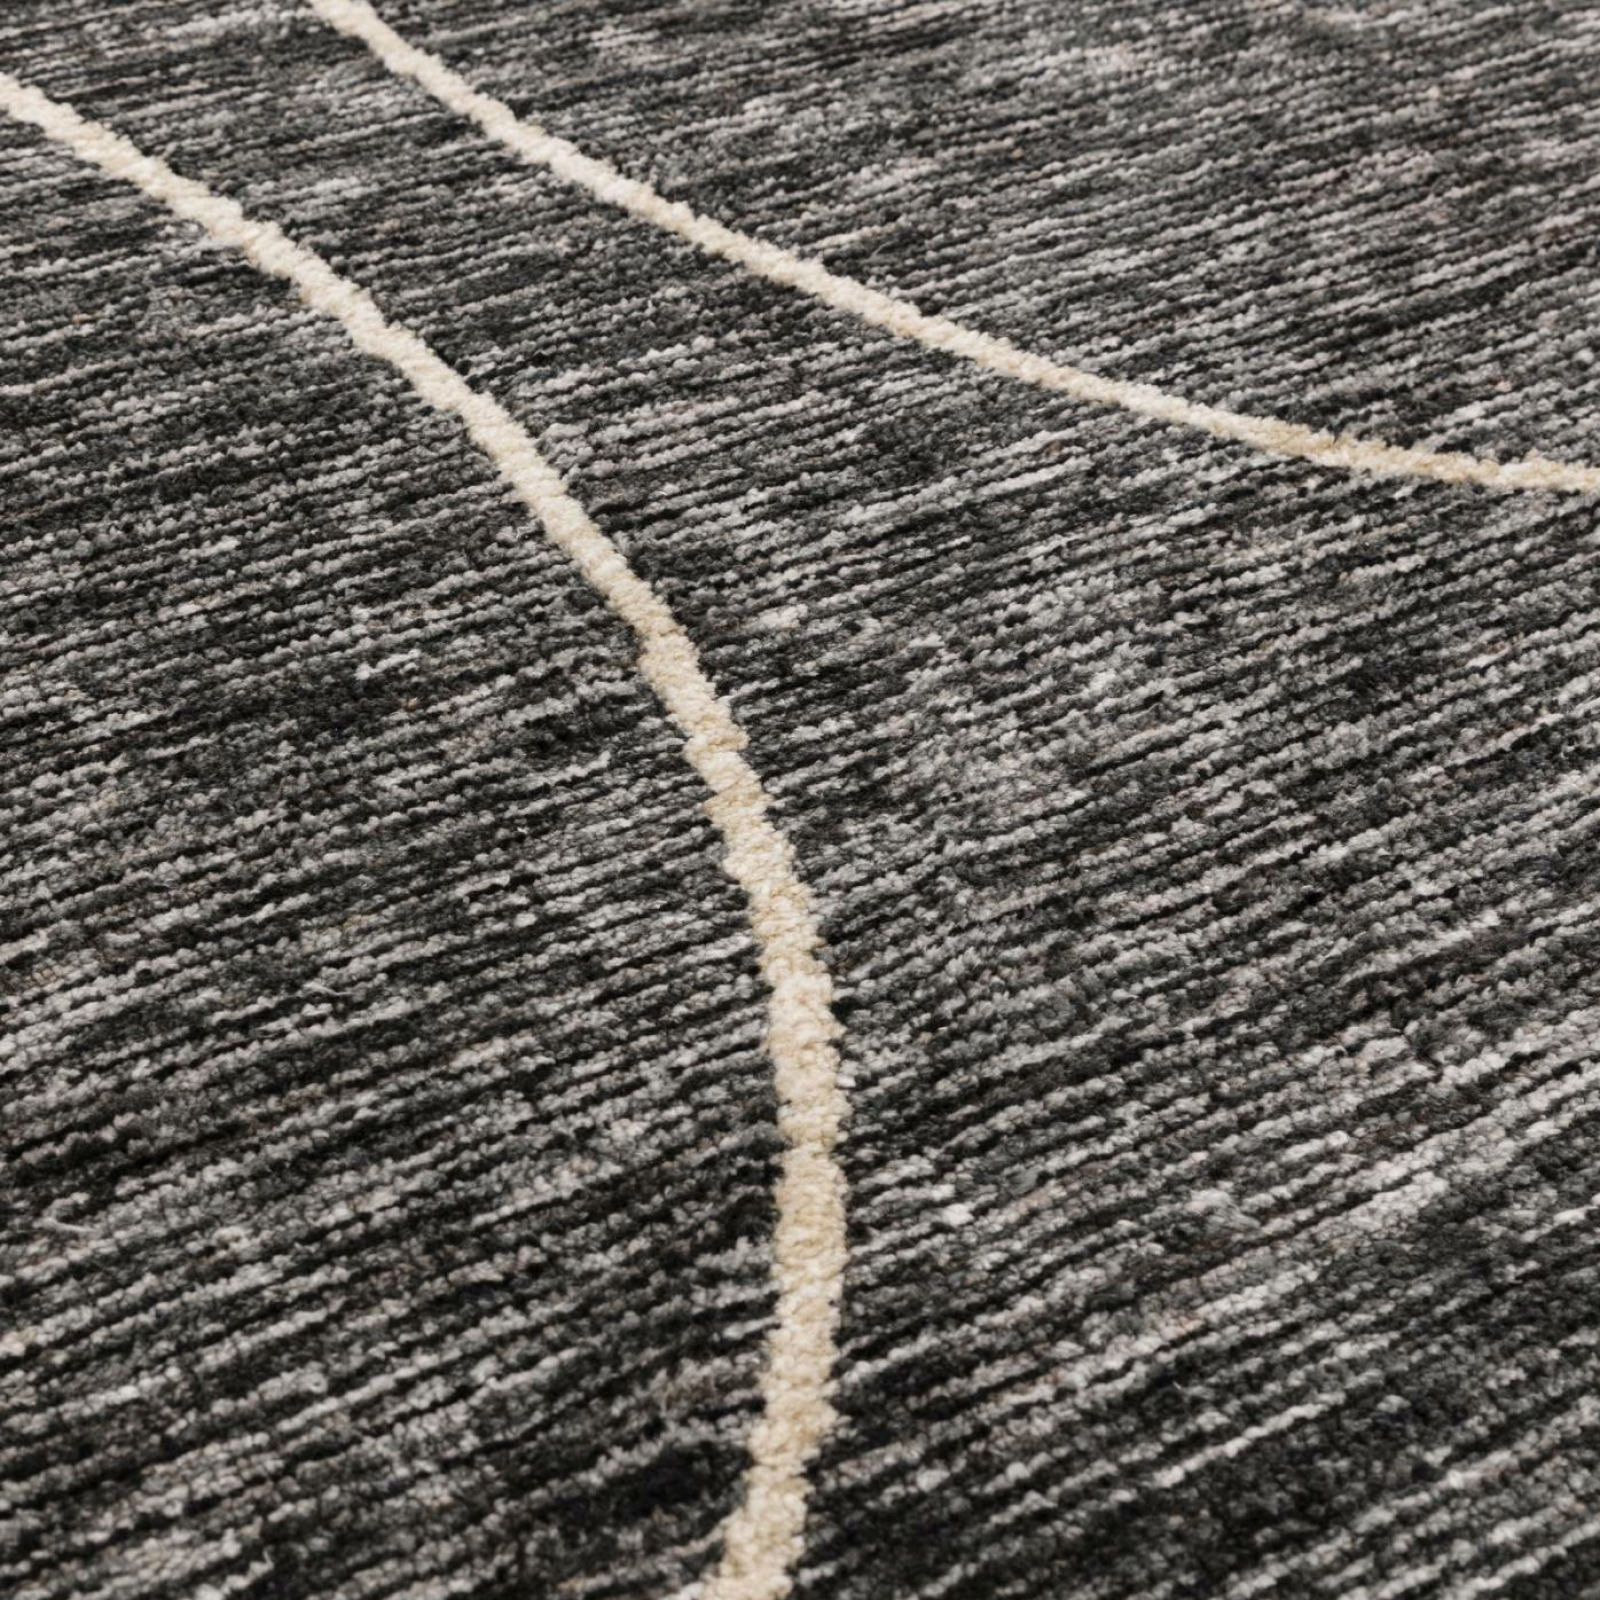 Mason Linear carpet